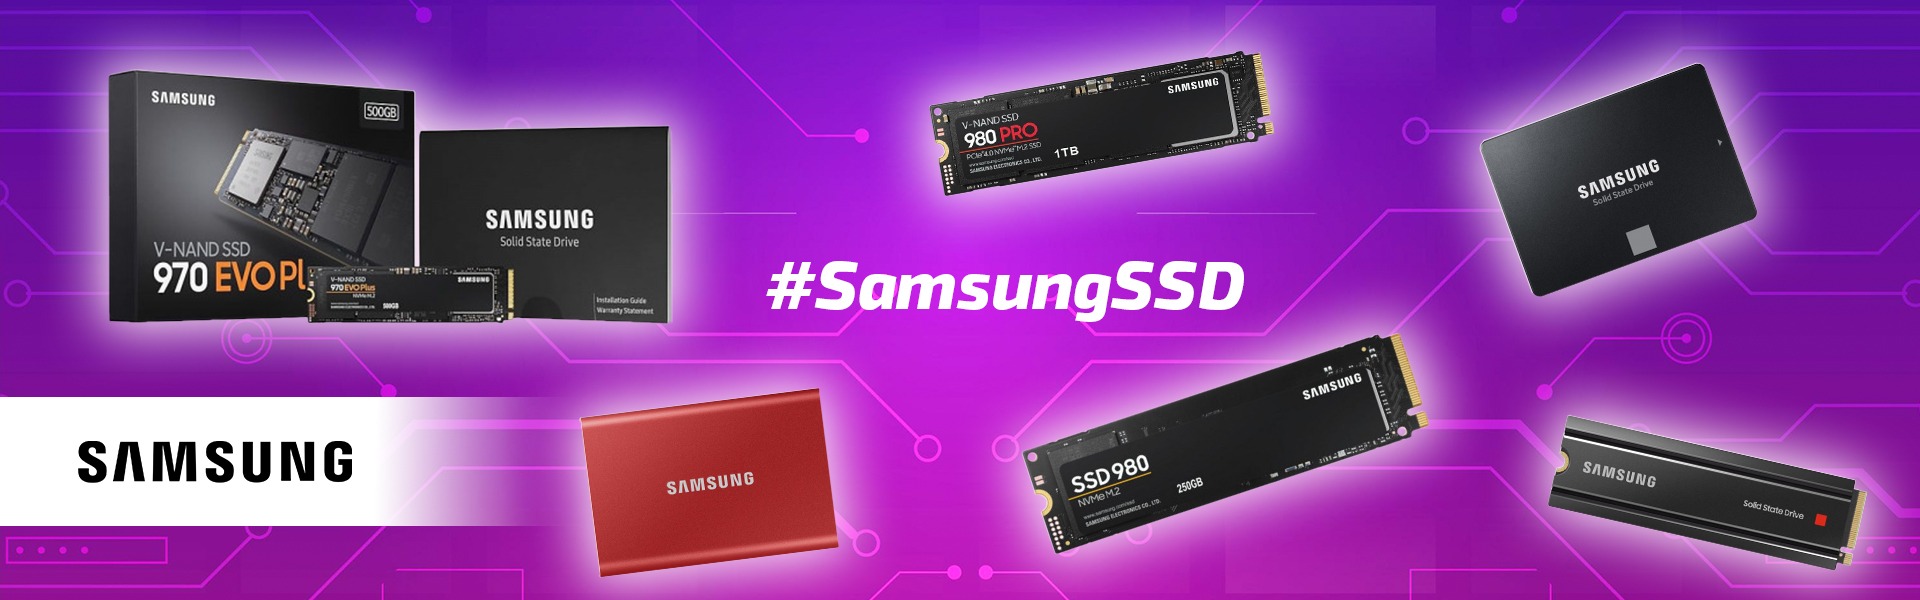 Samsung SSD v3